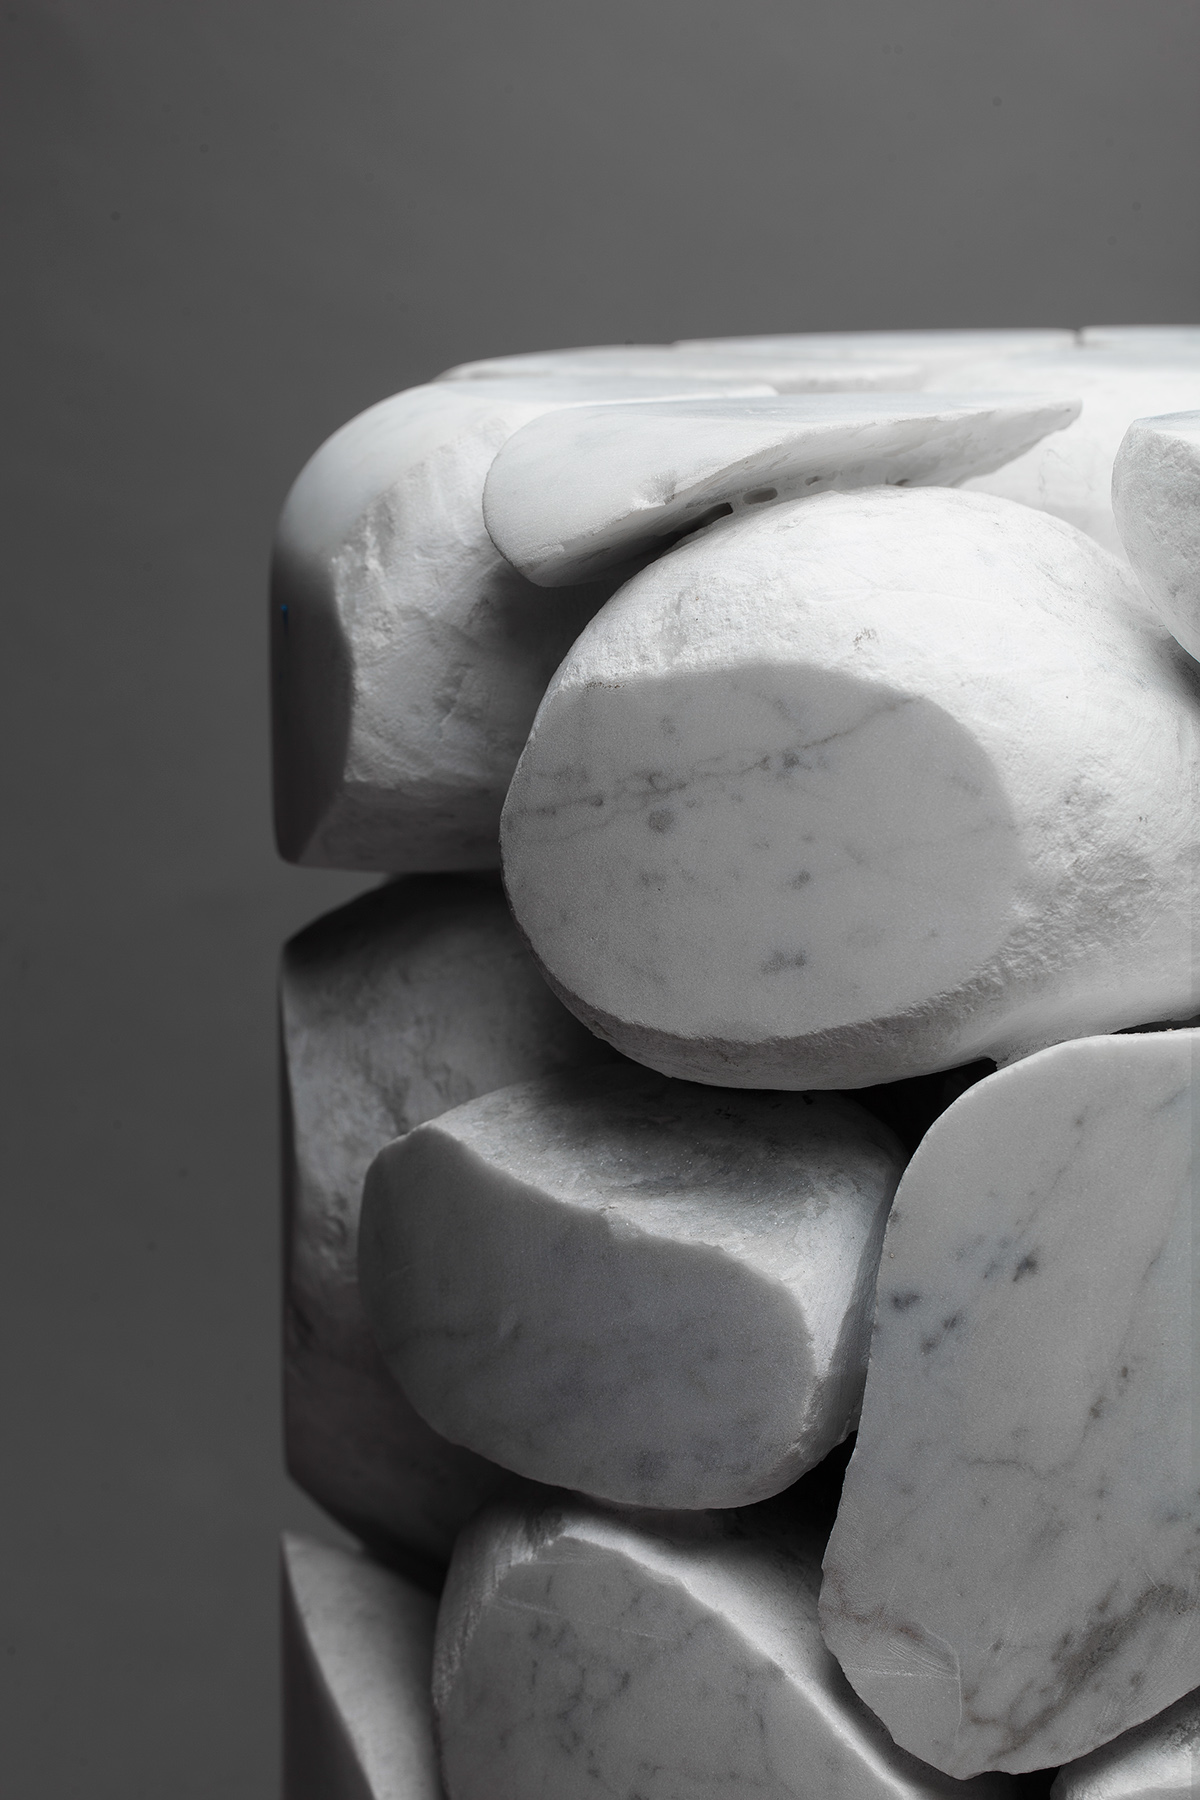 Vase andrea basile lorenzo damiani stones design designer still life milan Italy concept flower White Marble photo texture